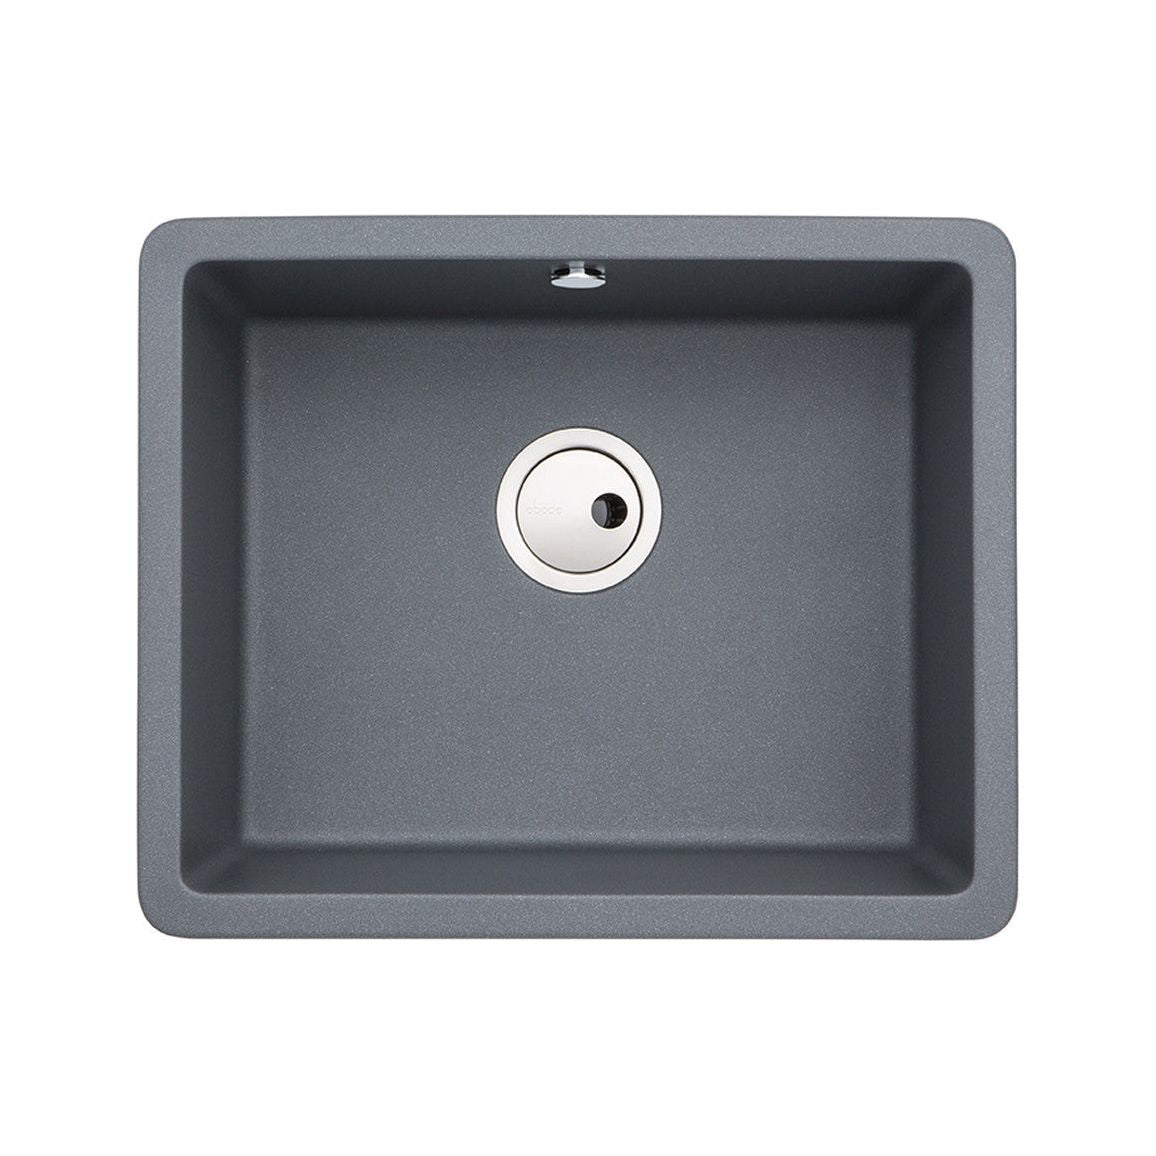 Abode Matrix Sq GR15 Large 1B Granite Inset/Undermount Sink - Grey Metallic